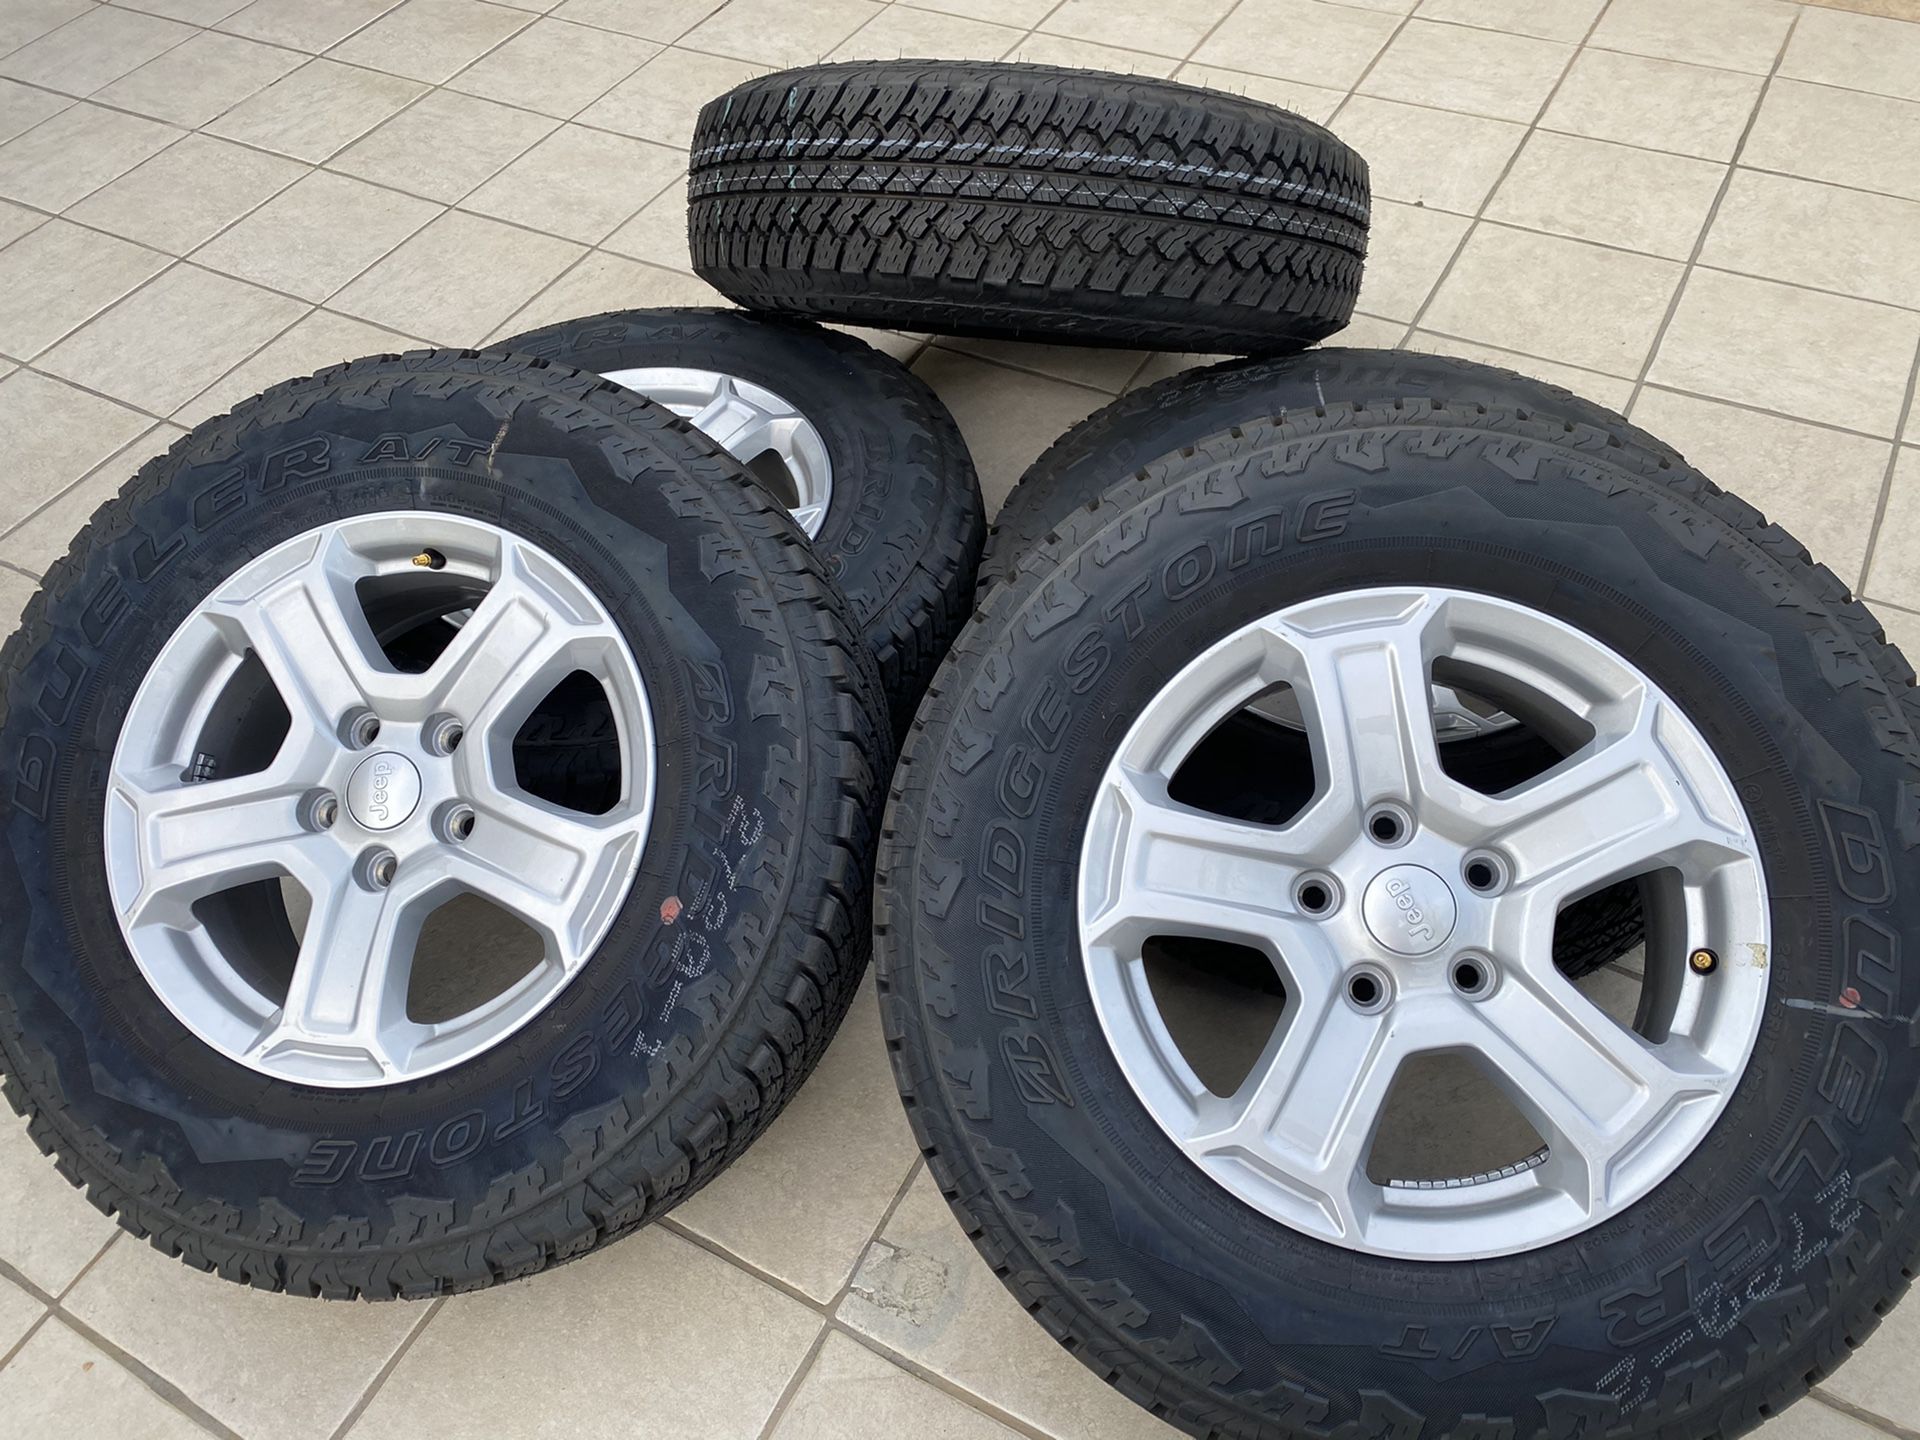 2020 Jeep wrangler wheels Bridgestone AT Tires 245/75/17 5x5 Rubicon Sahara jk JL Grand Cherokee